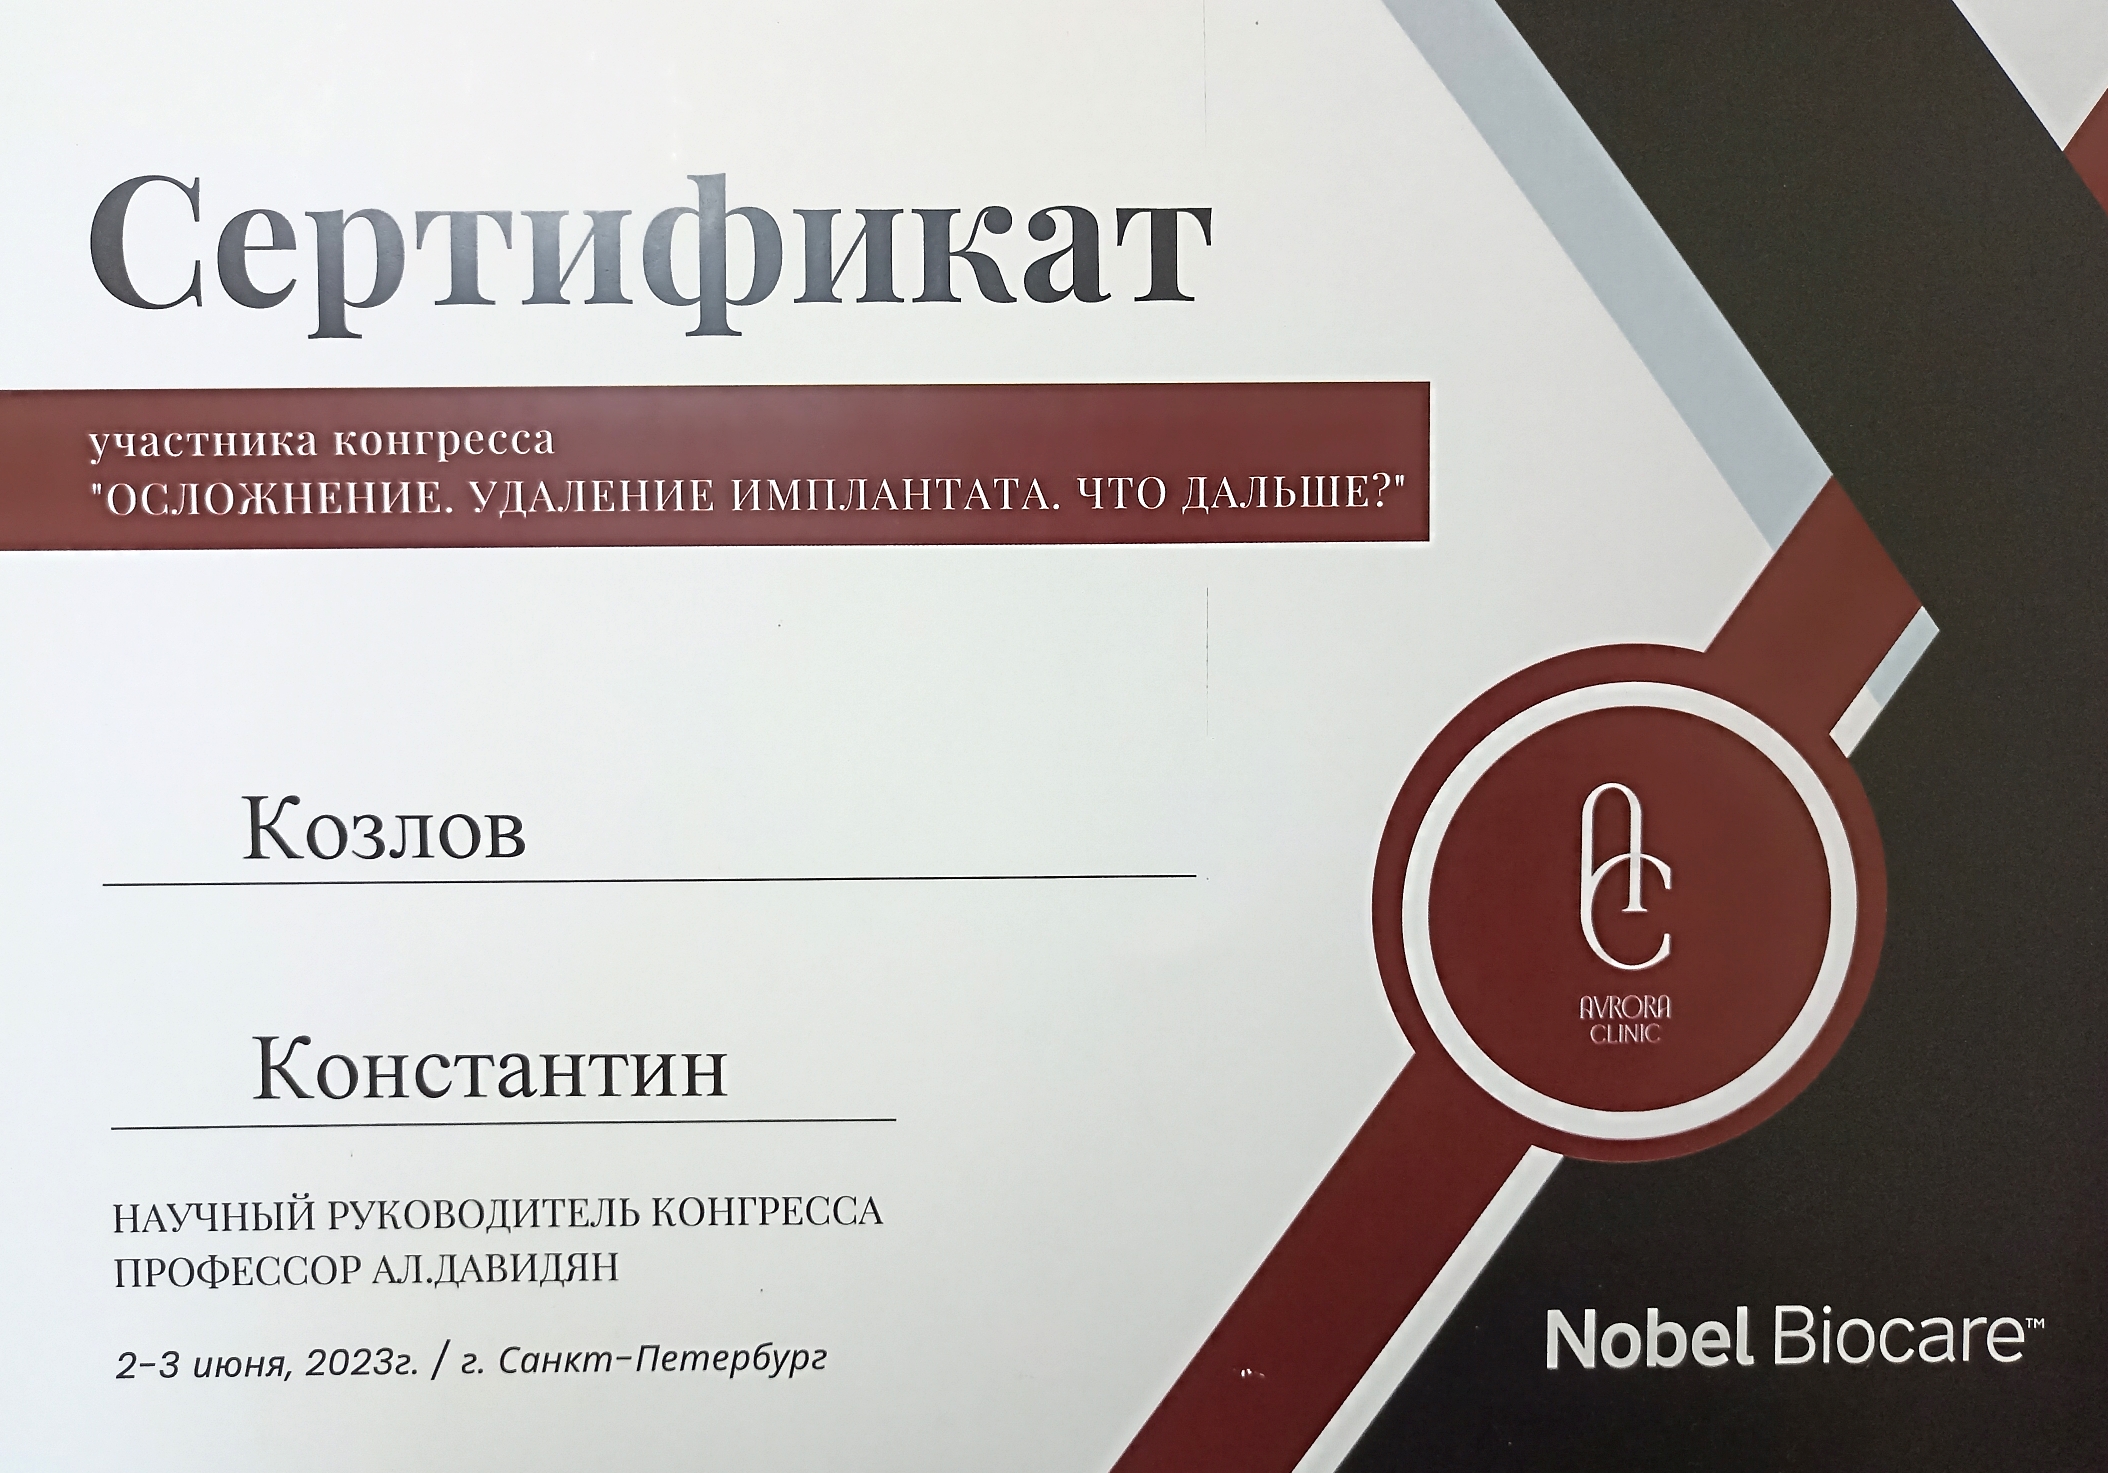 Сертификат Константина Селиванова. Козлов стоматолог Рязань.